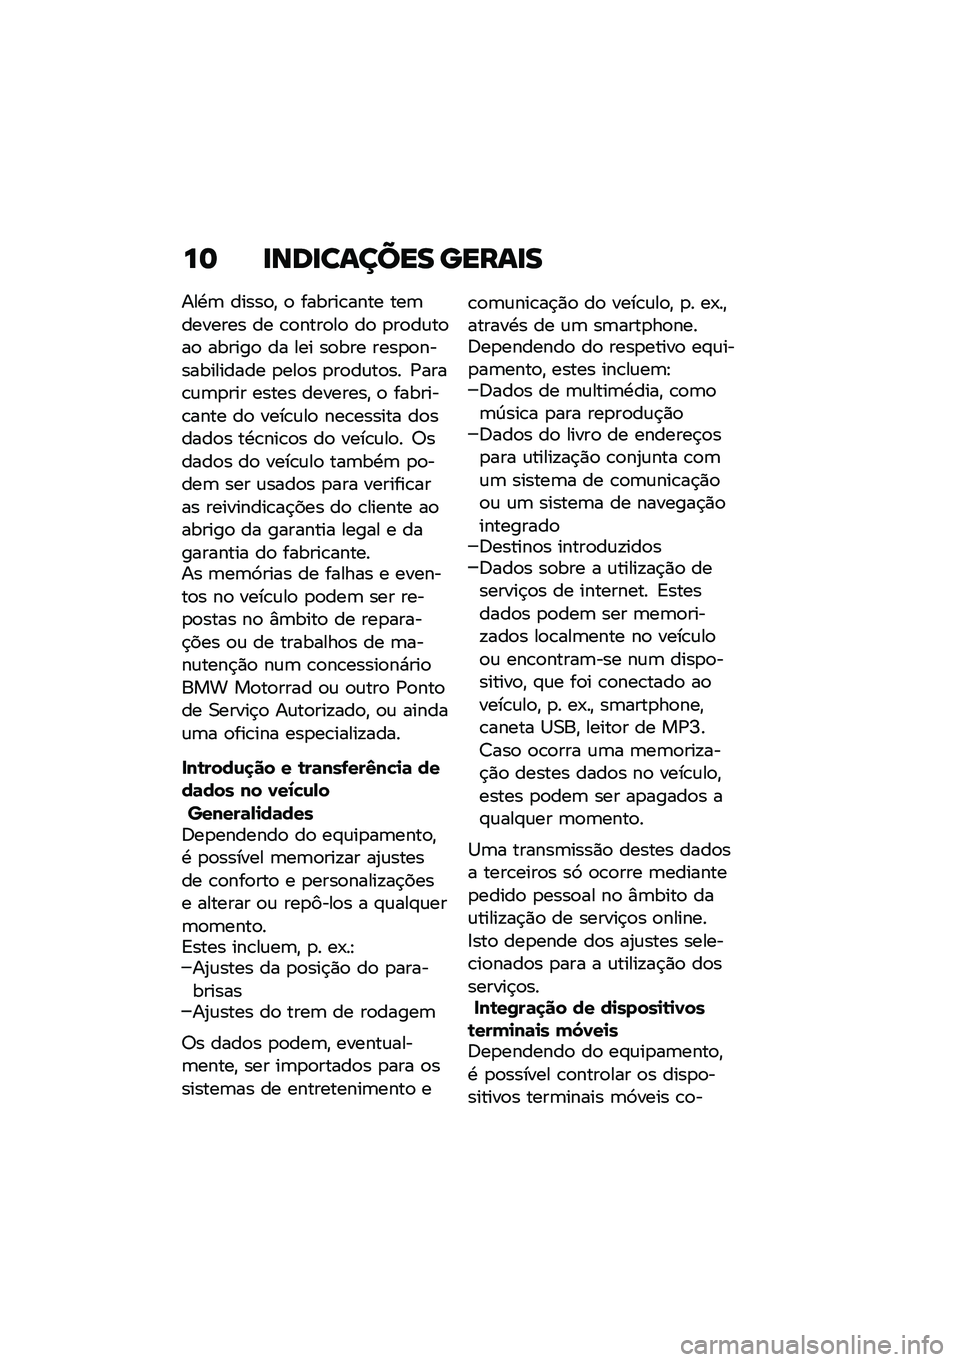 BMW MOTORRAD C 400 GT 2020  Manual do condutor (in Portuguese) ��	 �
���
������ �����
�
���.�	 �����
�" �
 ������\b���� ���	������� �� �\b�
����
��
 ��
 �
��
��\f��
��
 ������
 �� ��� ��
��� ����
�